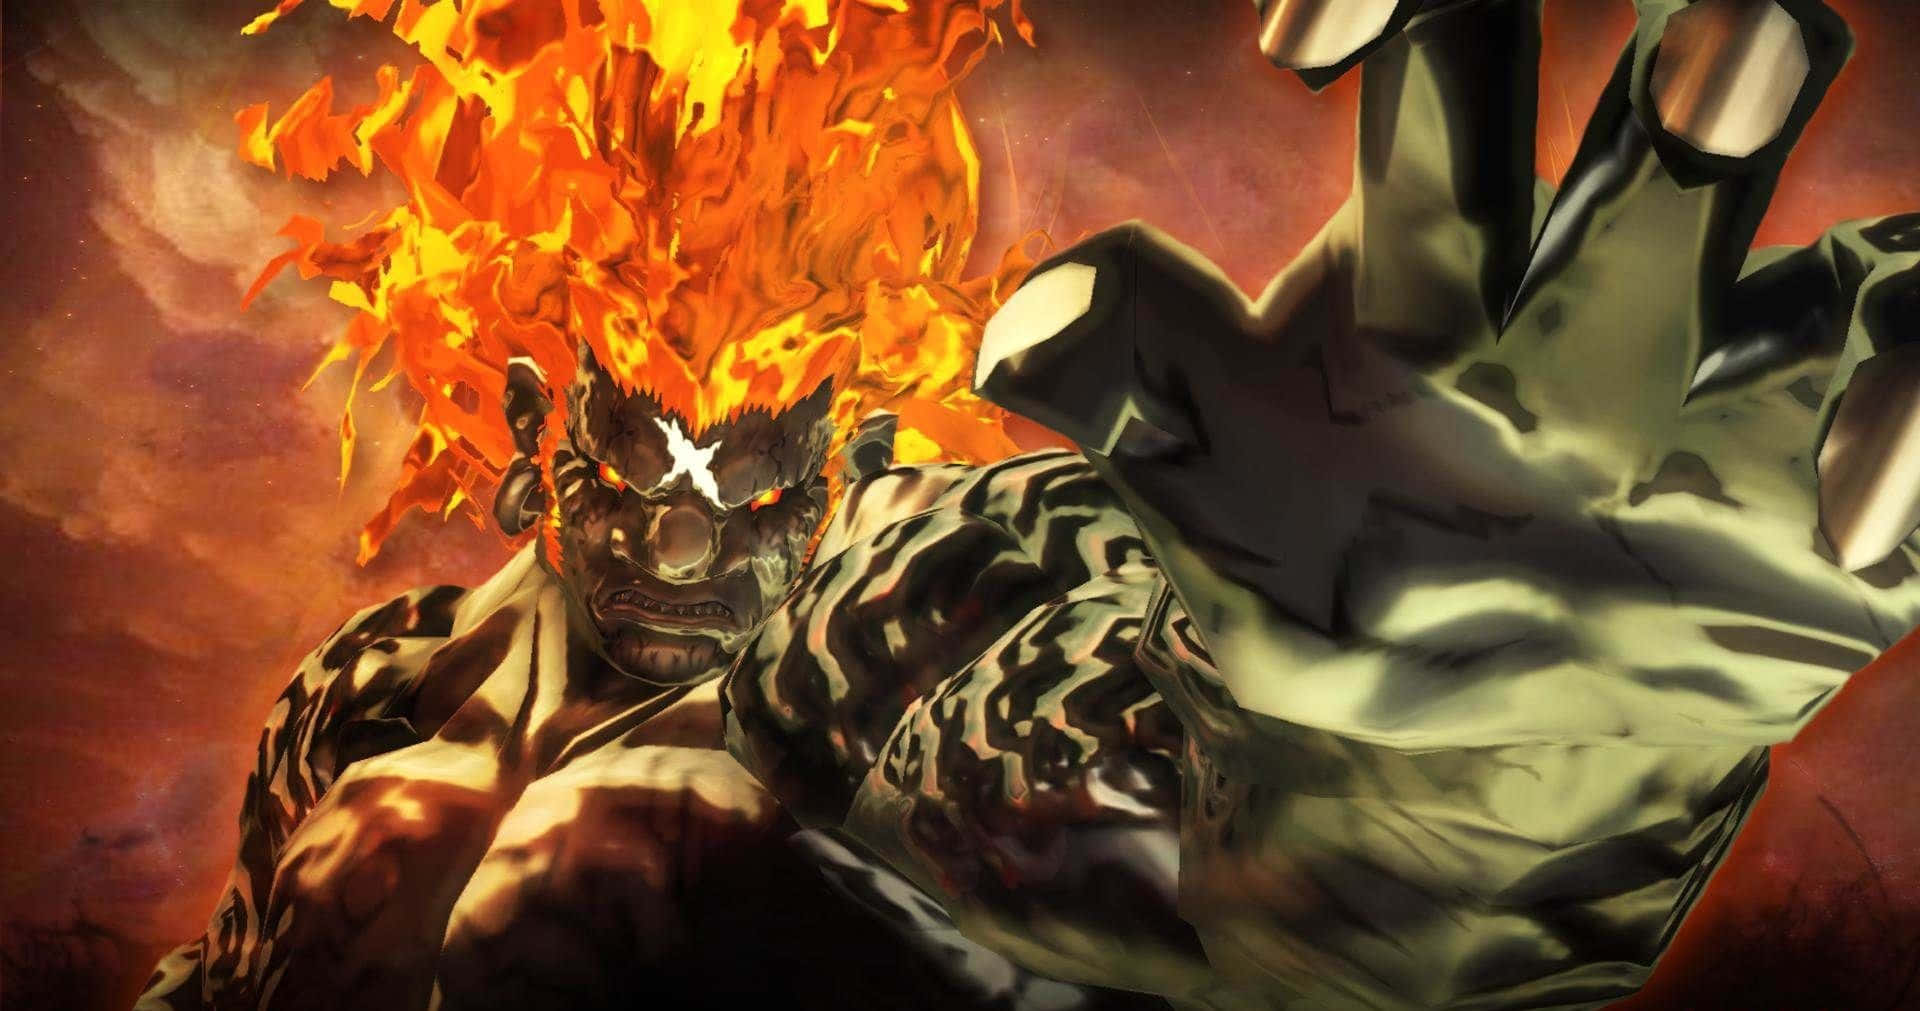 Powerful Ganondorf ruling his dark kingdom in Hyrule Wallpaper